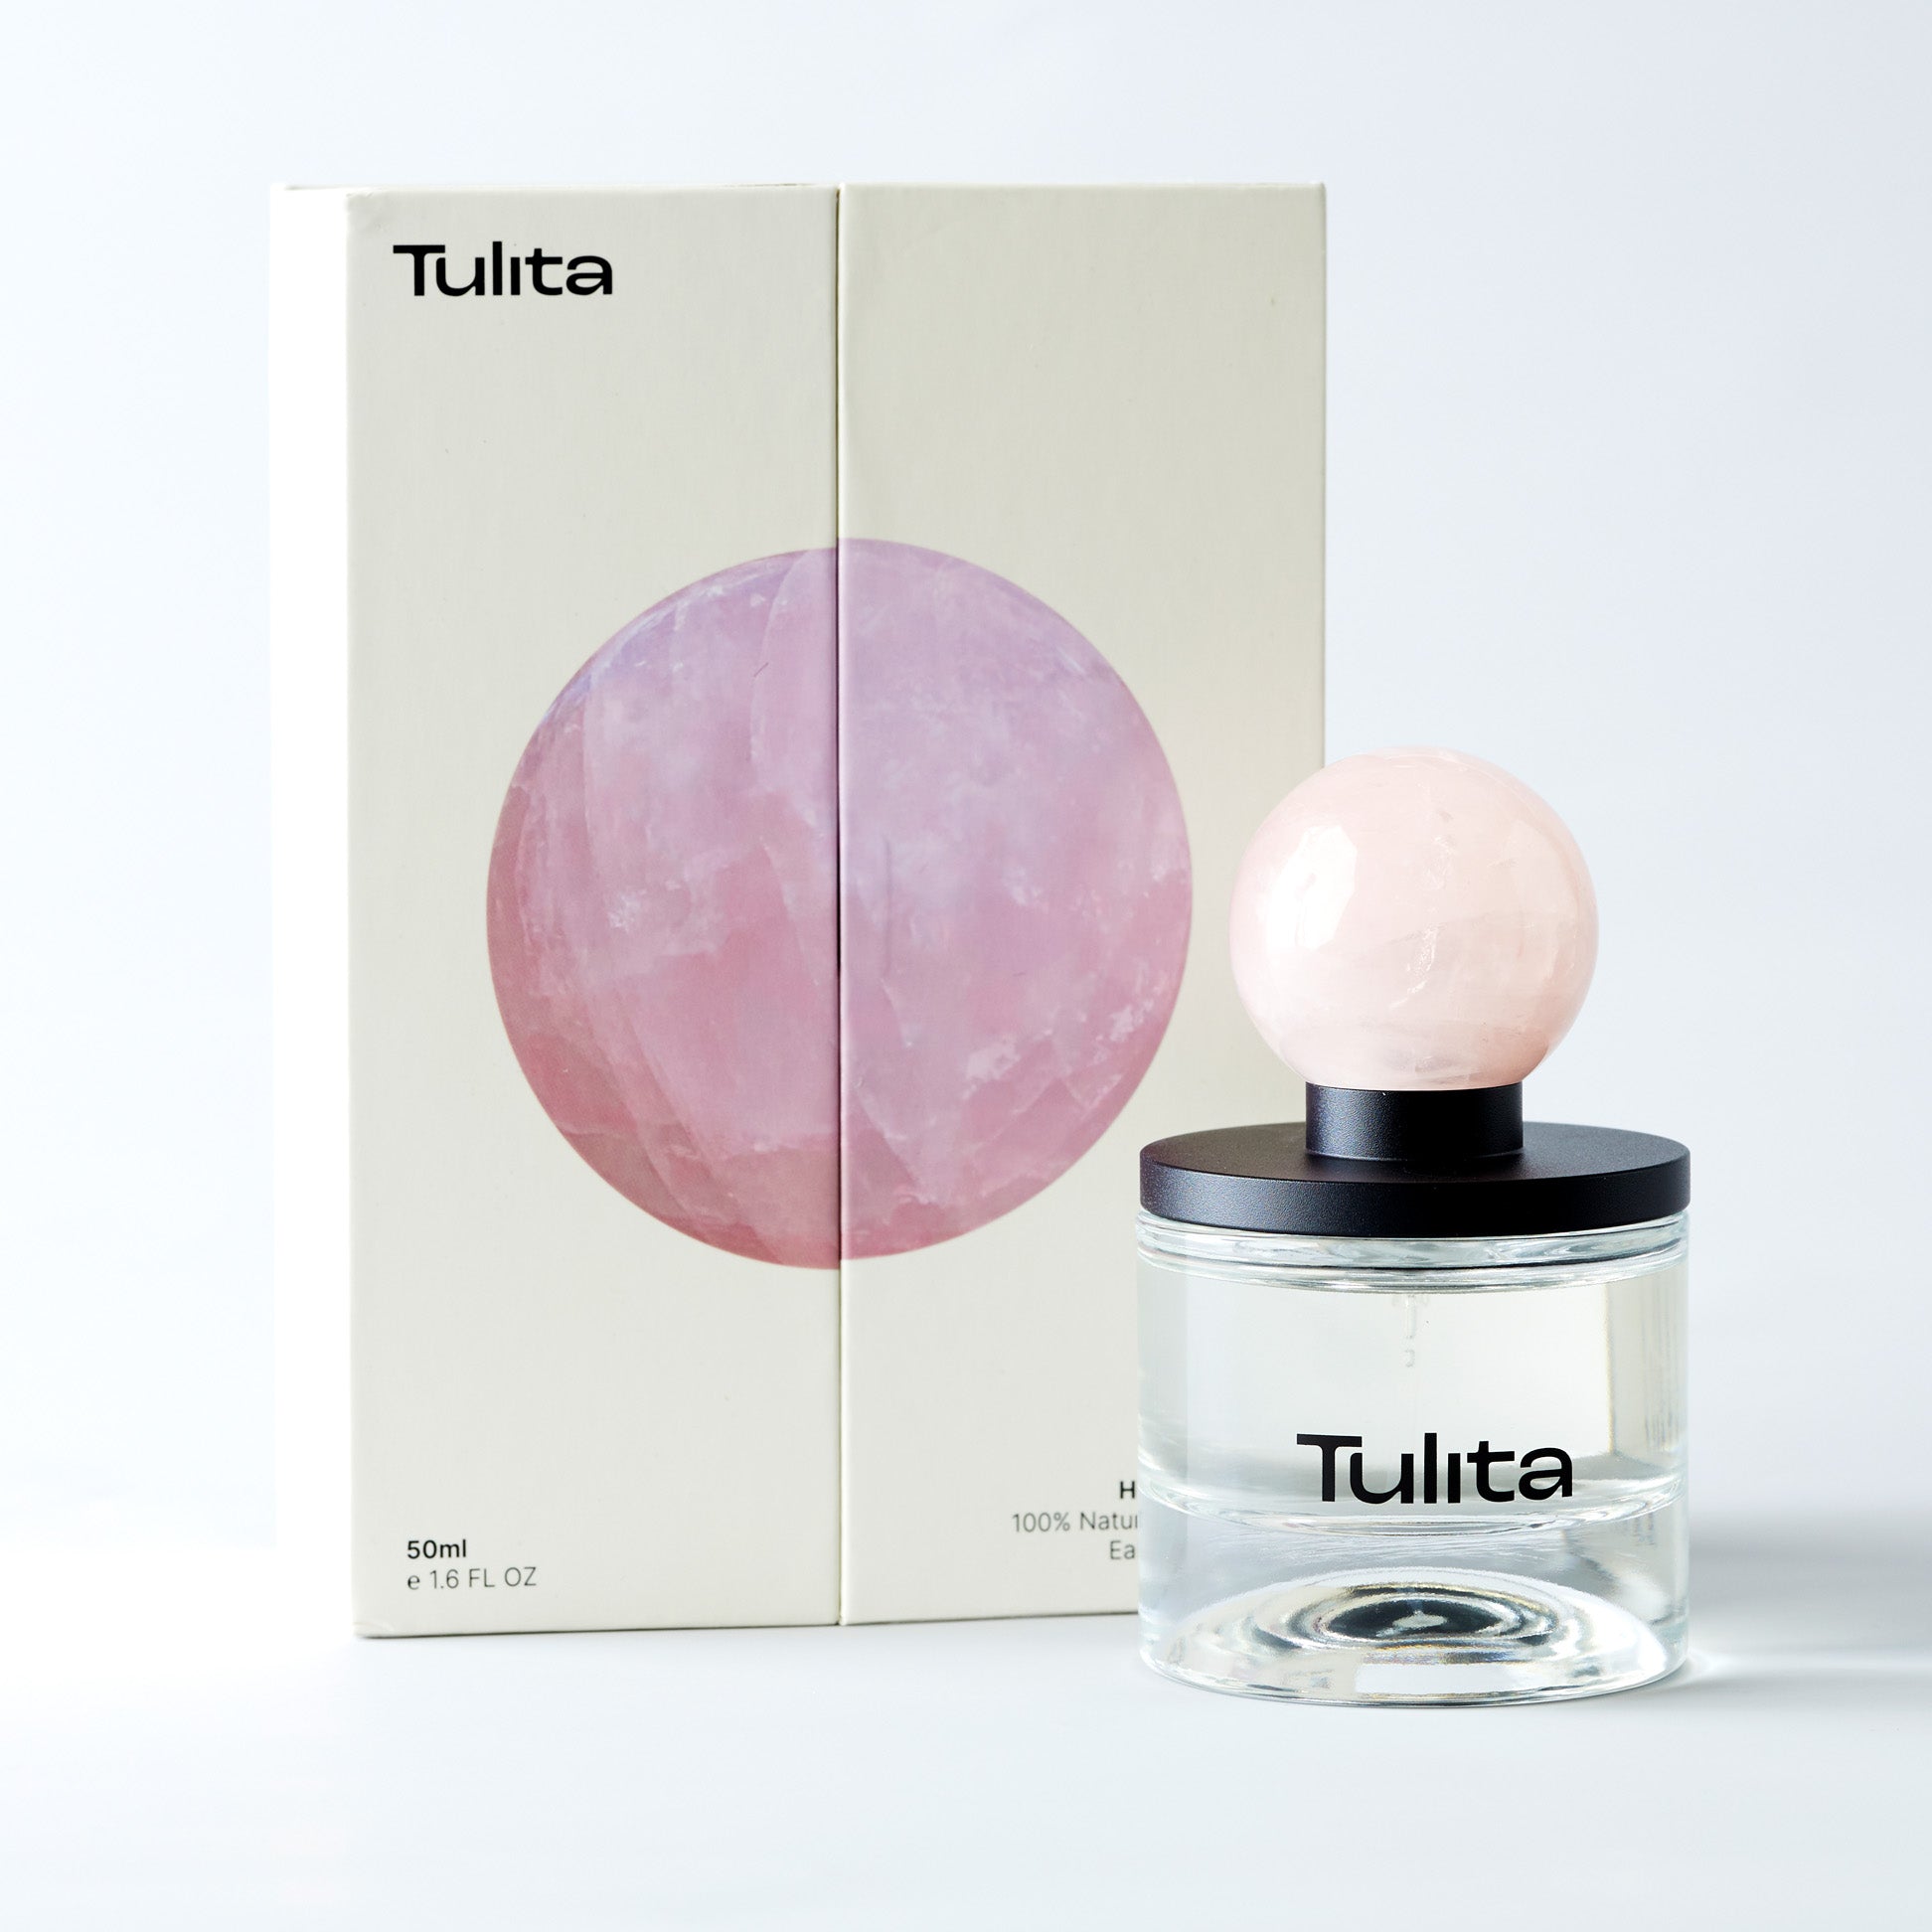 Vikasa Natural fragrance by Tulita, now available at Sensoriam